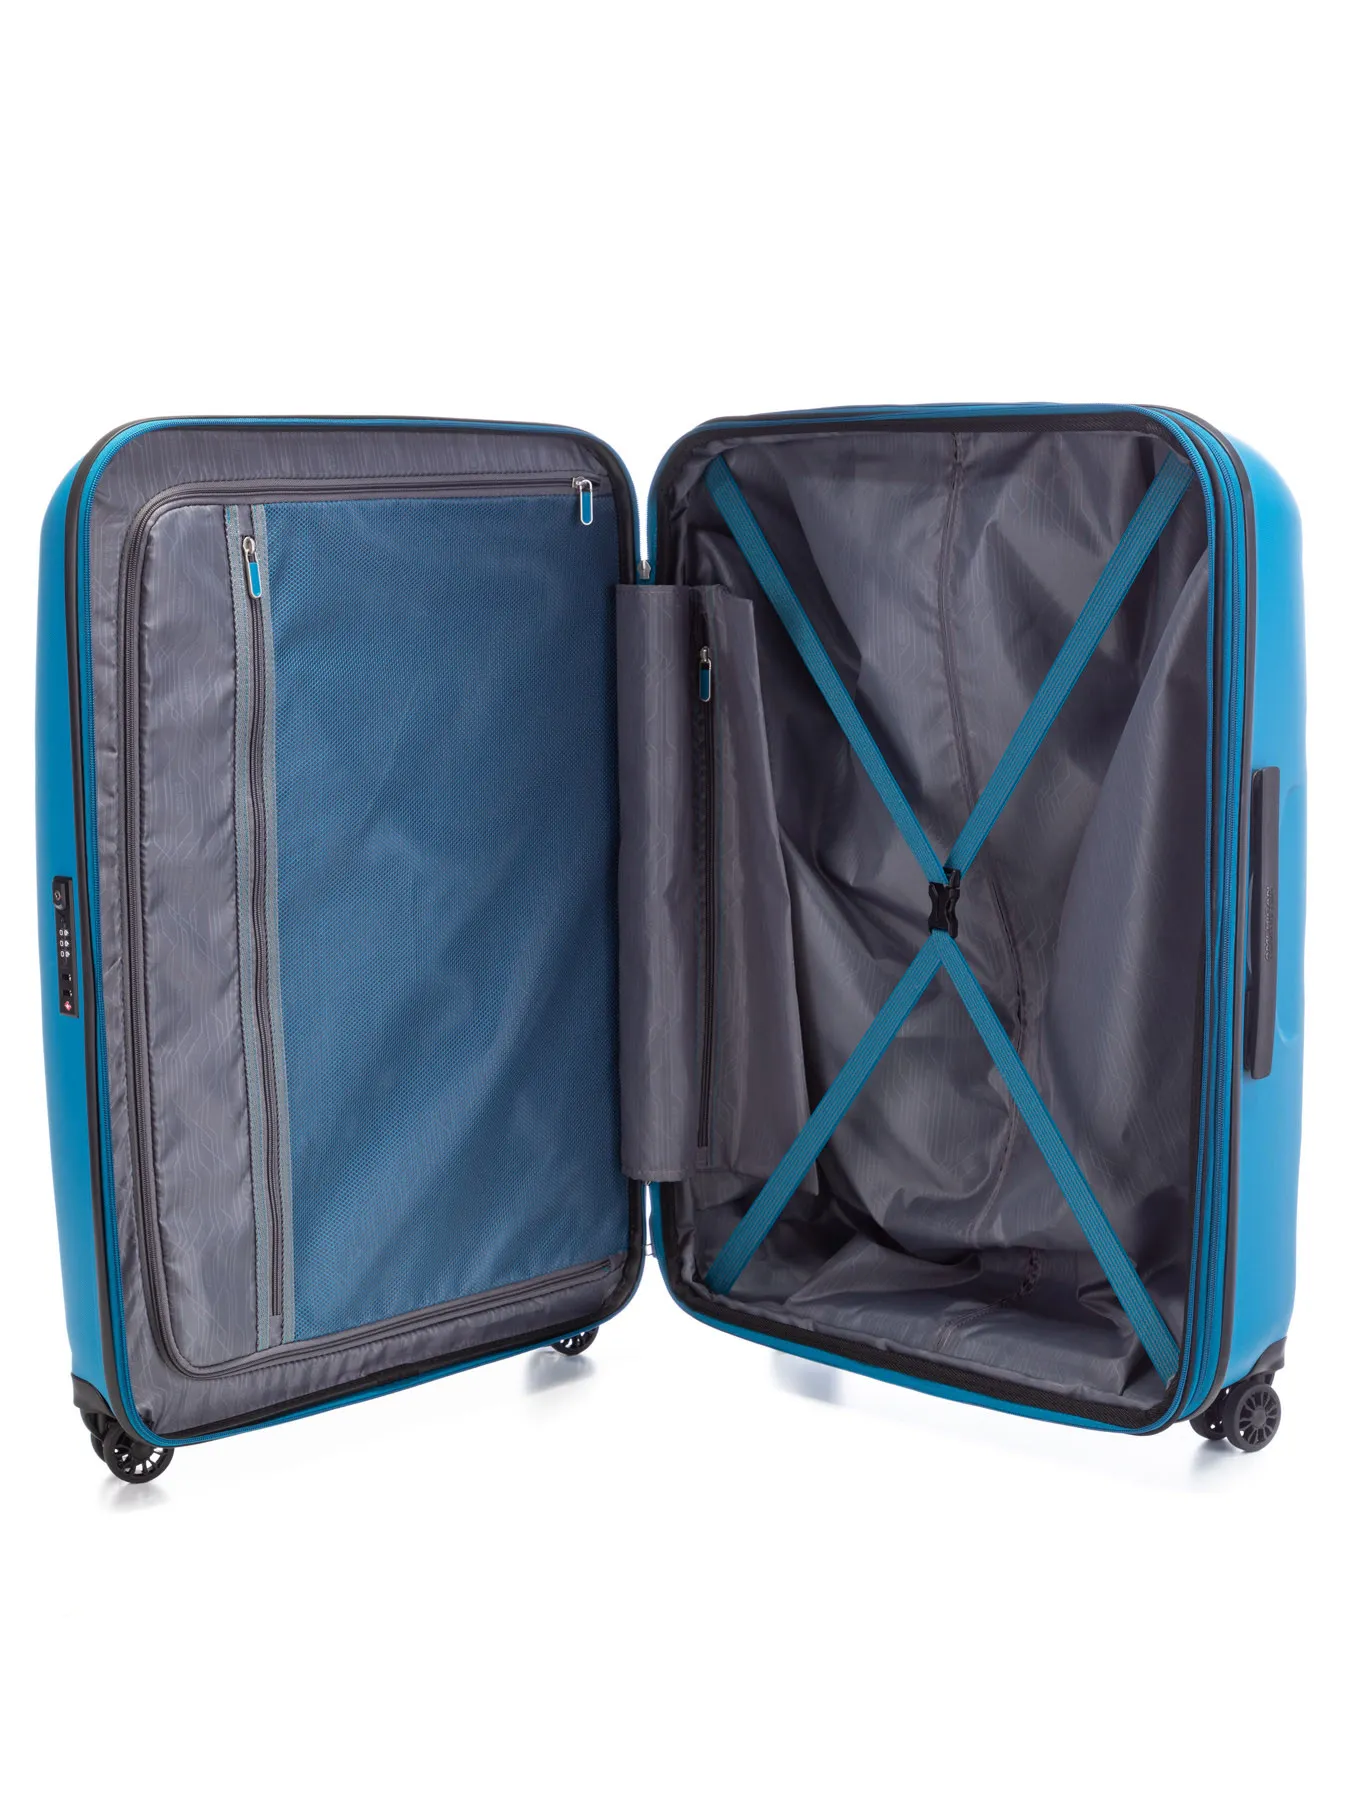 AMERICAN TOURISTER Bon Air DLX Veliki plavi kofer 